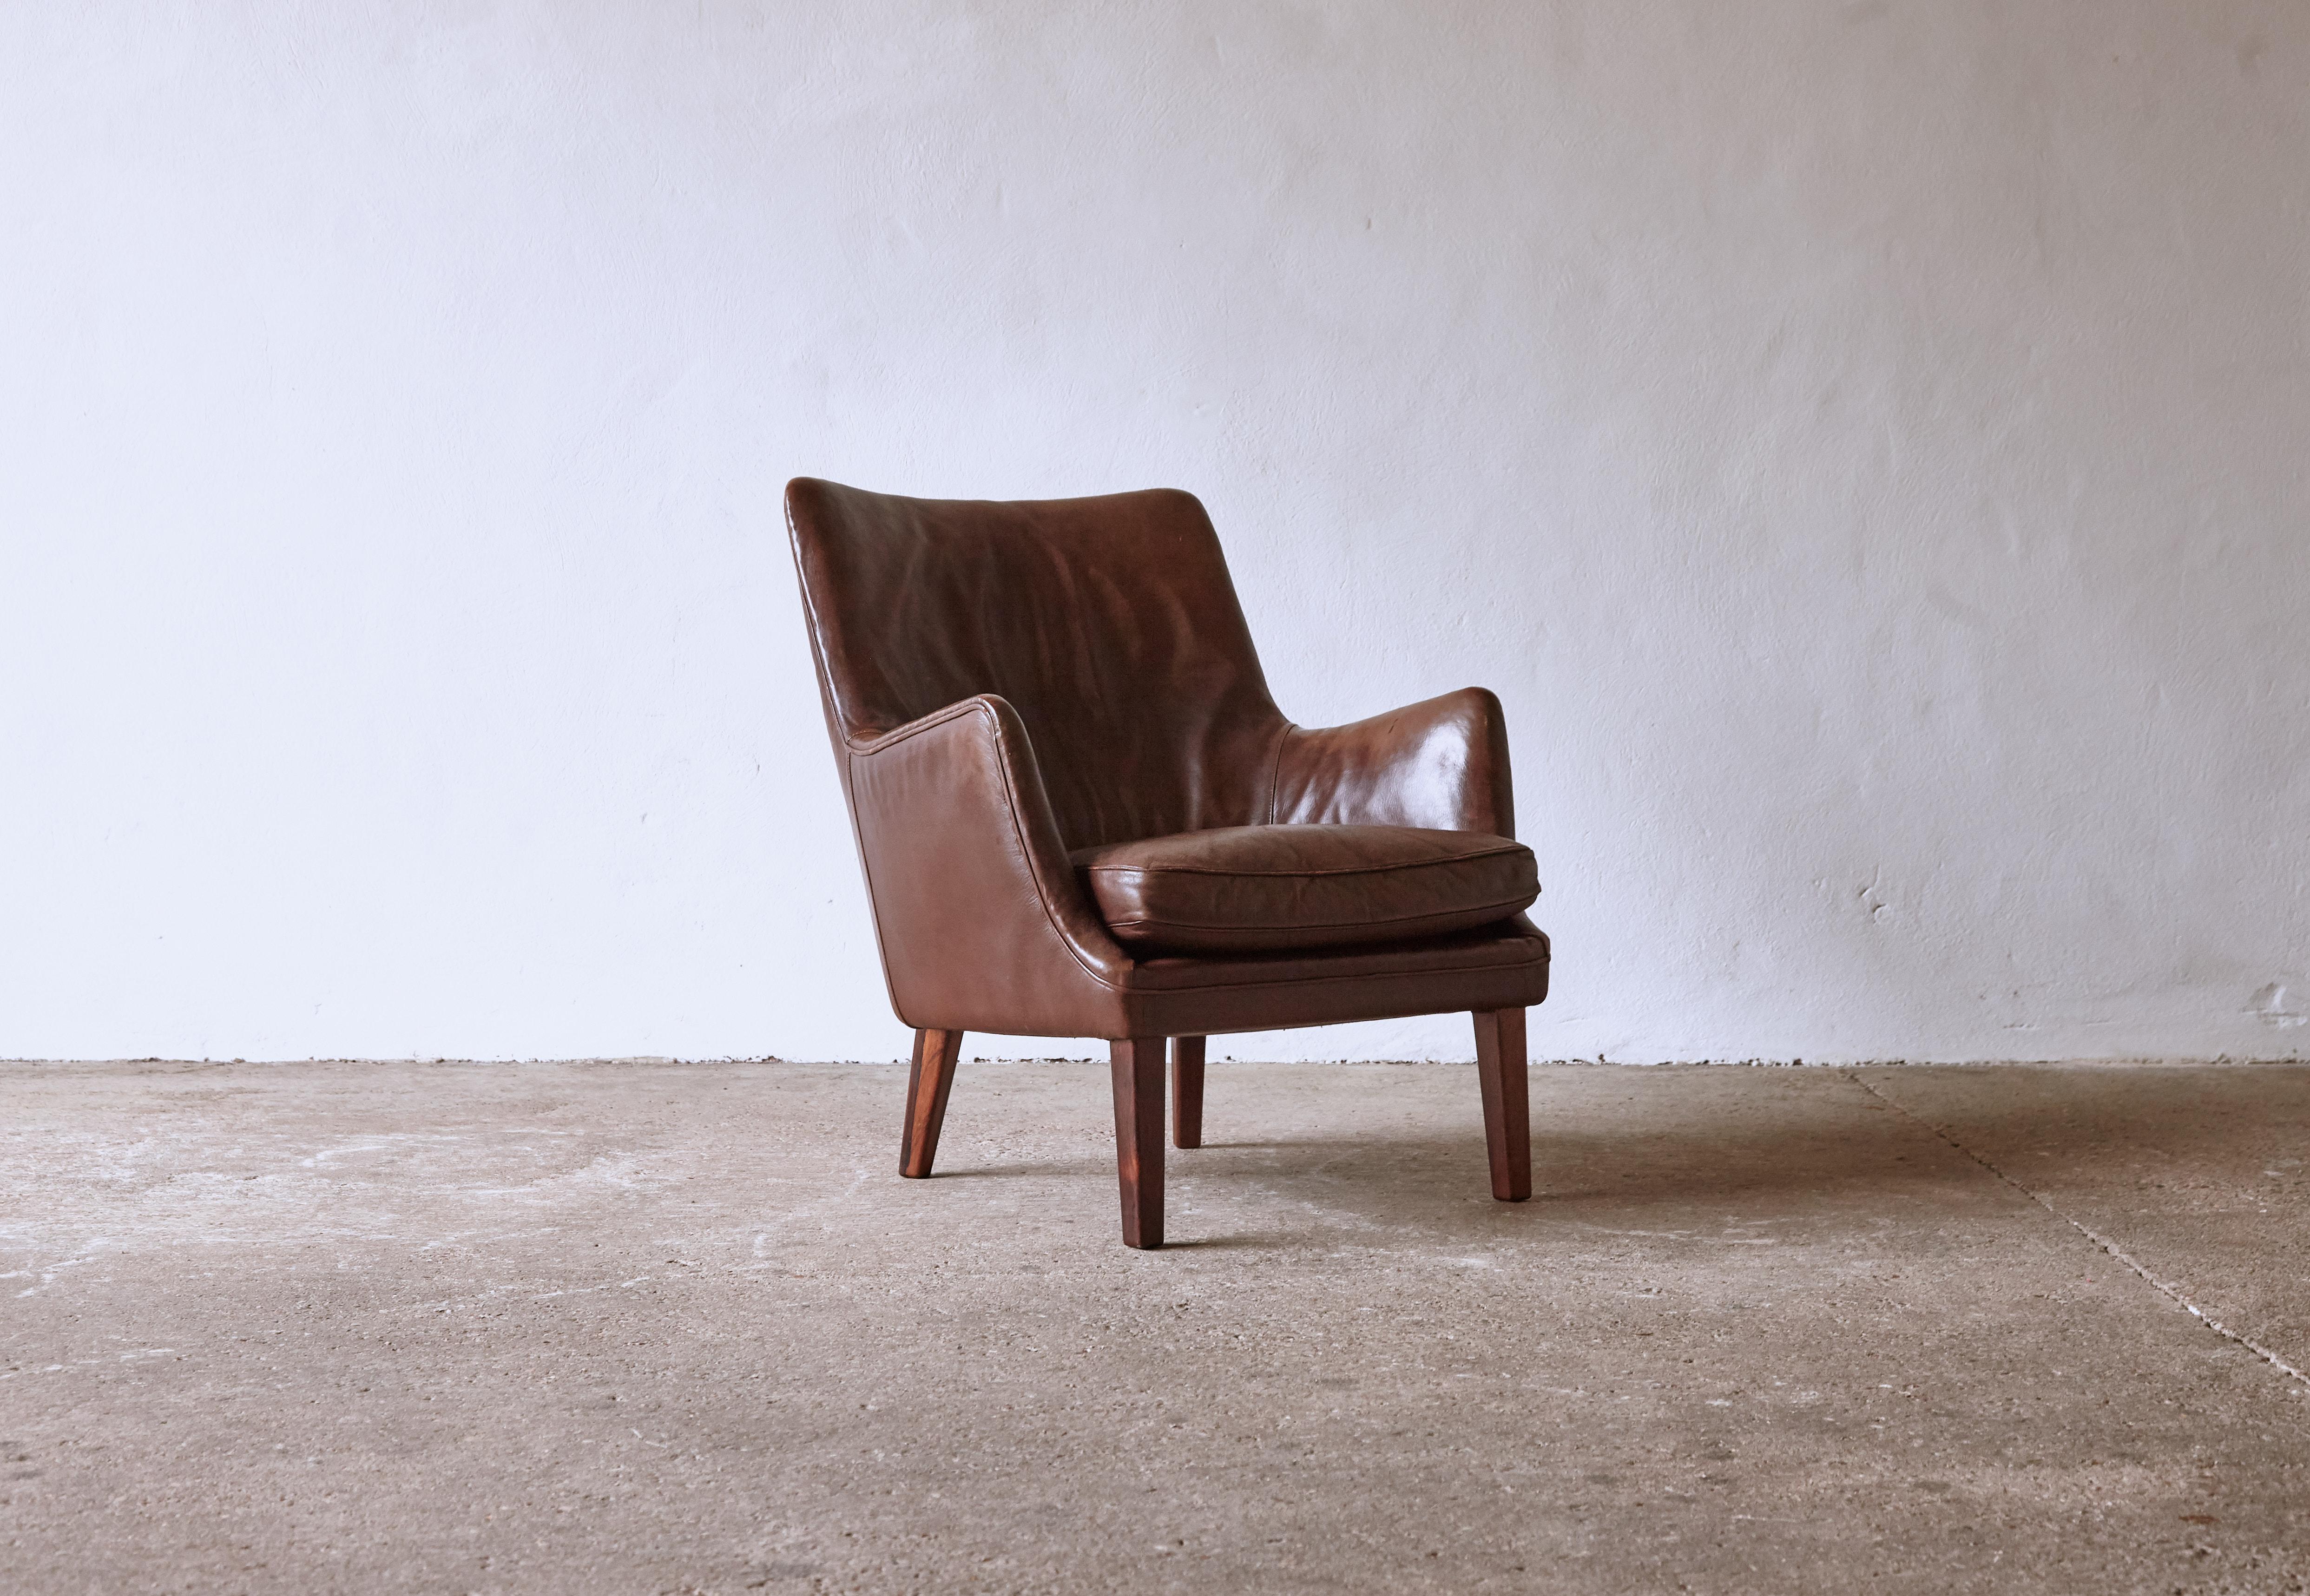 Arne Vodder Armchair in Original Leather, Denmark, 1950s For Sale 3